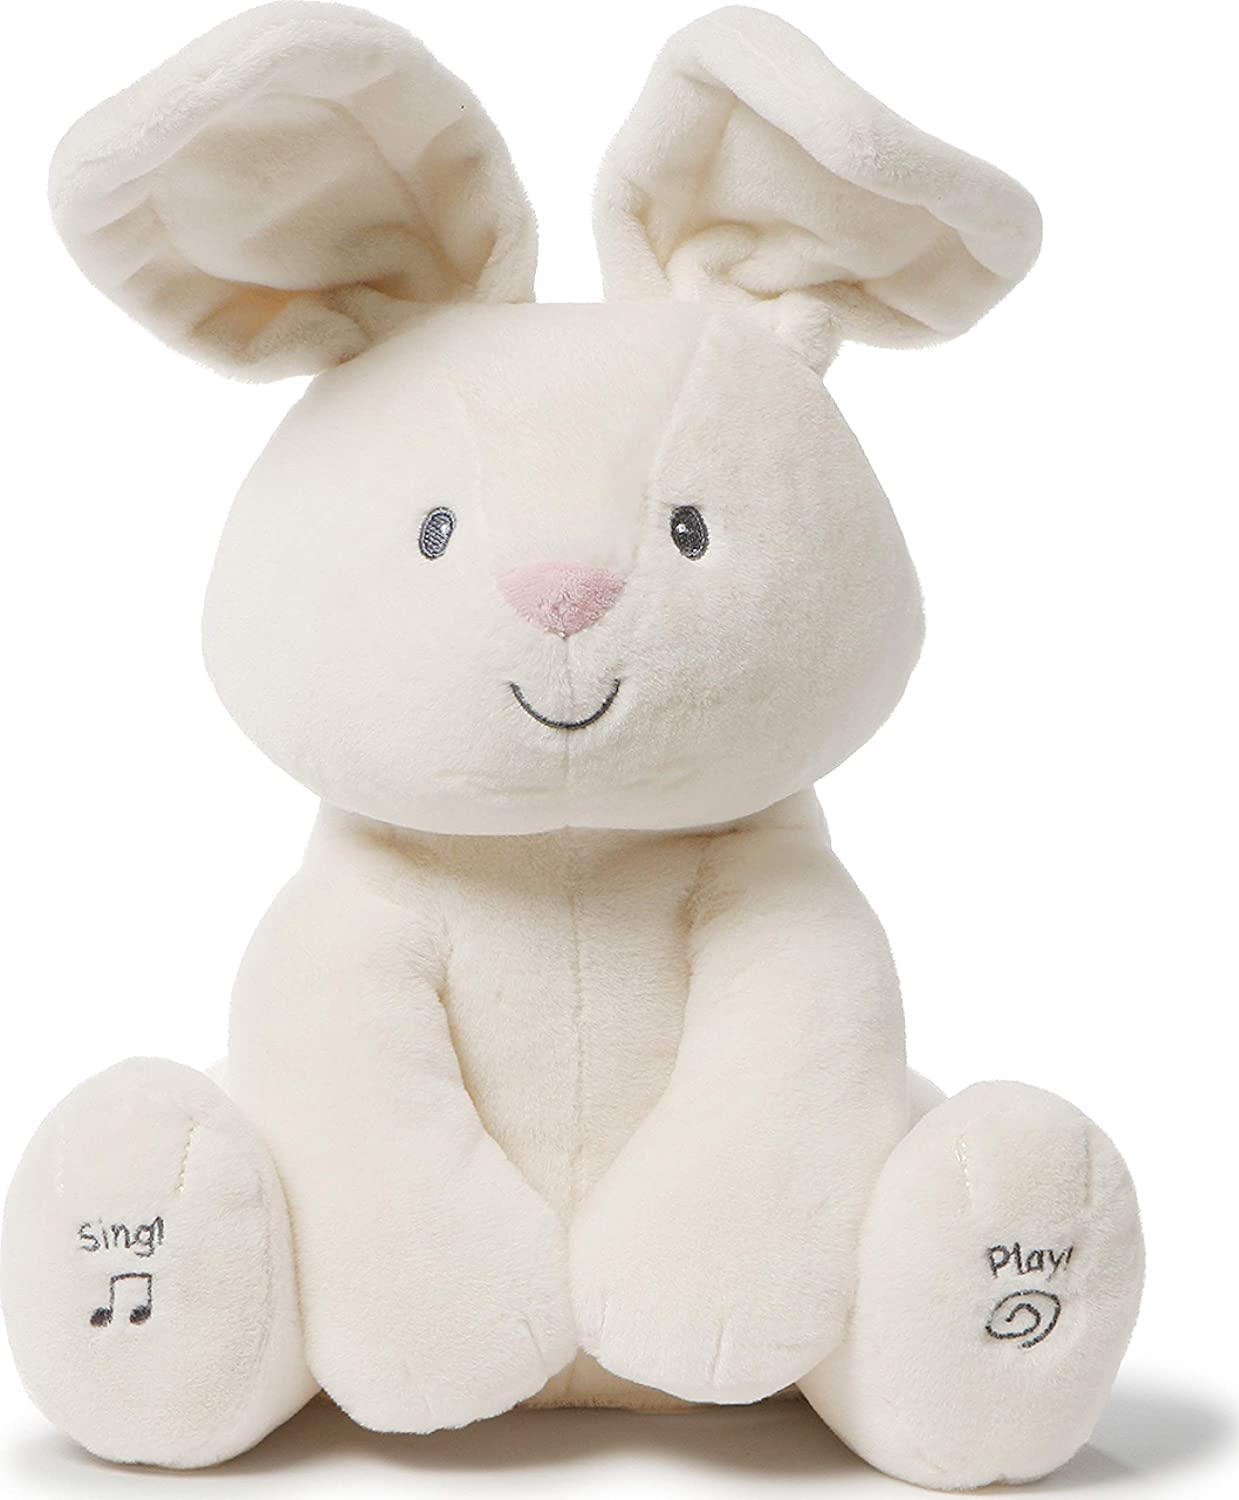 Baby GUND Flora The Bunny Animated Plush Stuffed Animal Toy - Cream - 12 Inch